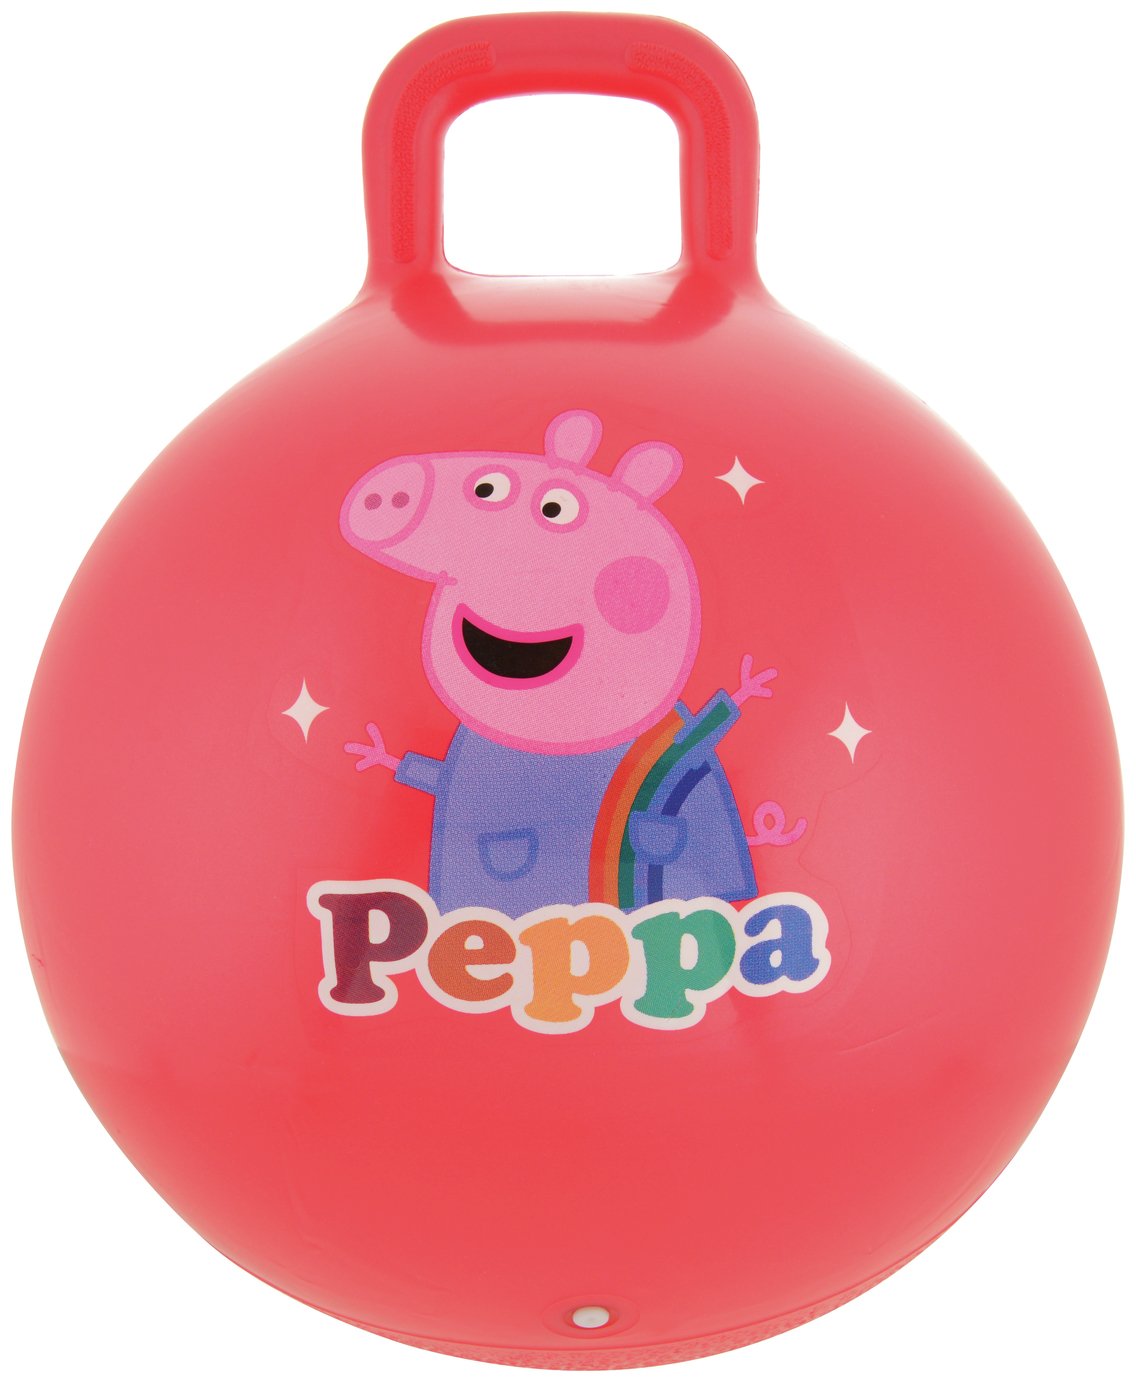 Peppa Pig Inflatable Hopper